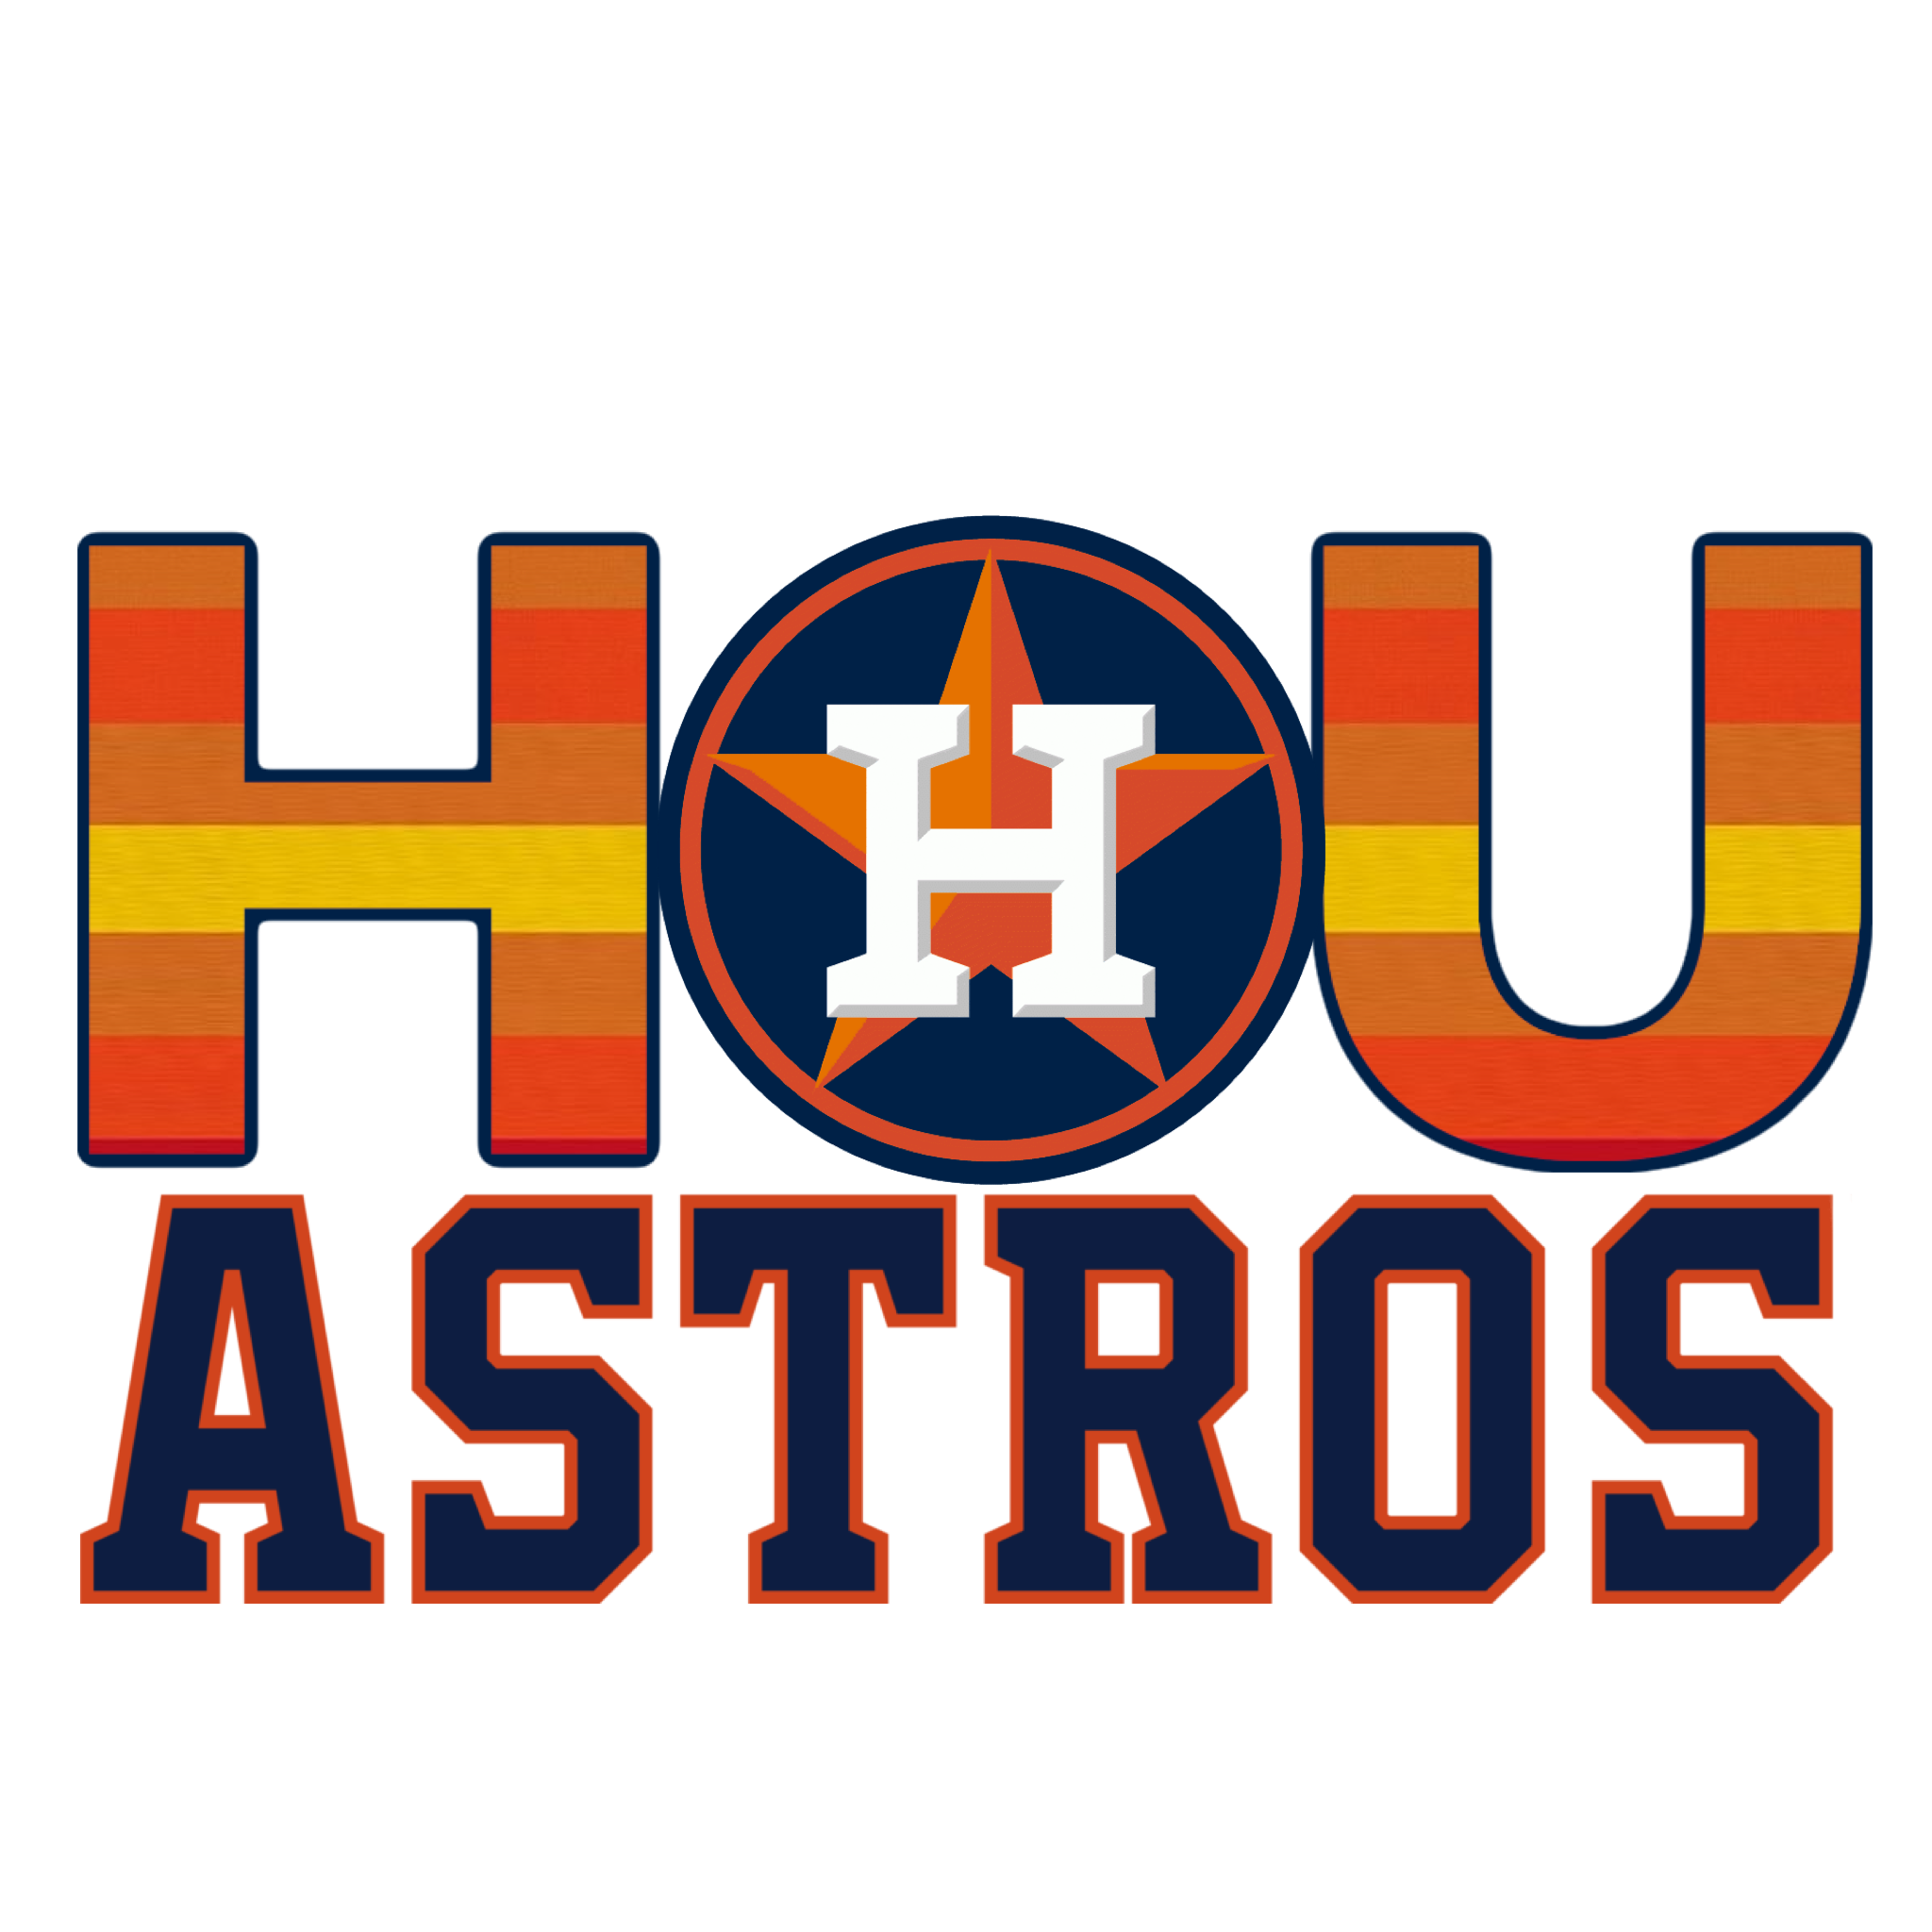 100+] Houston Astros Backgrounds